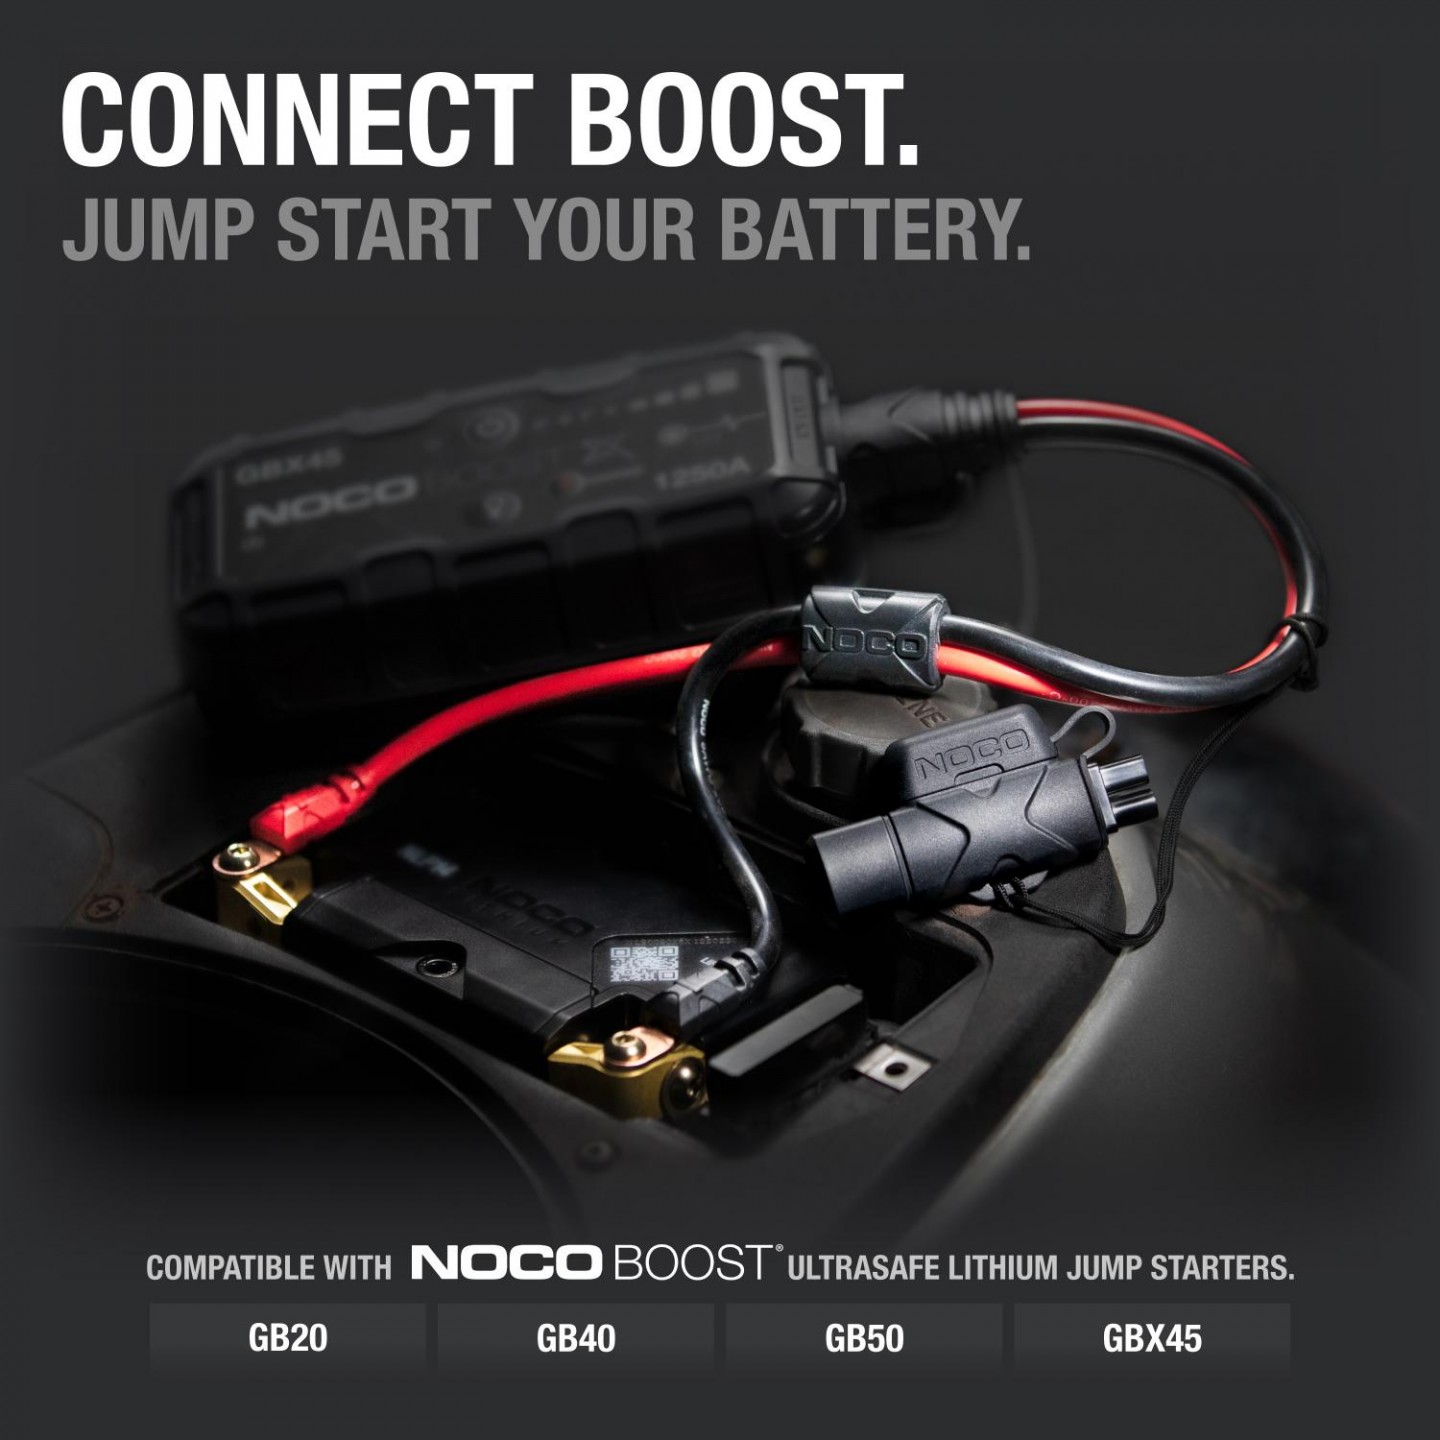 GB40 NOCO Boost Jump Starter, NOCO Genius GB40 Jump Starter